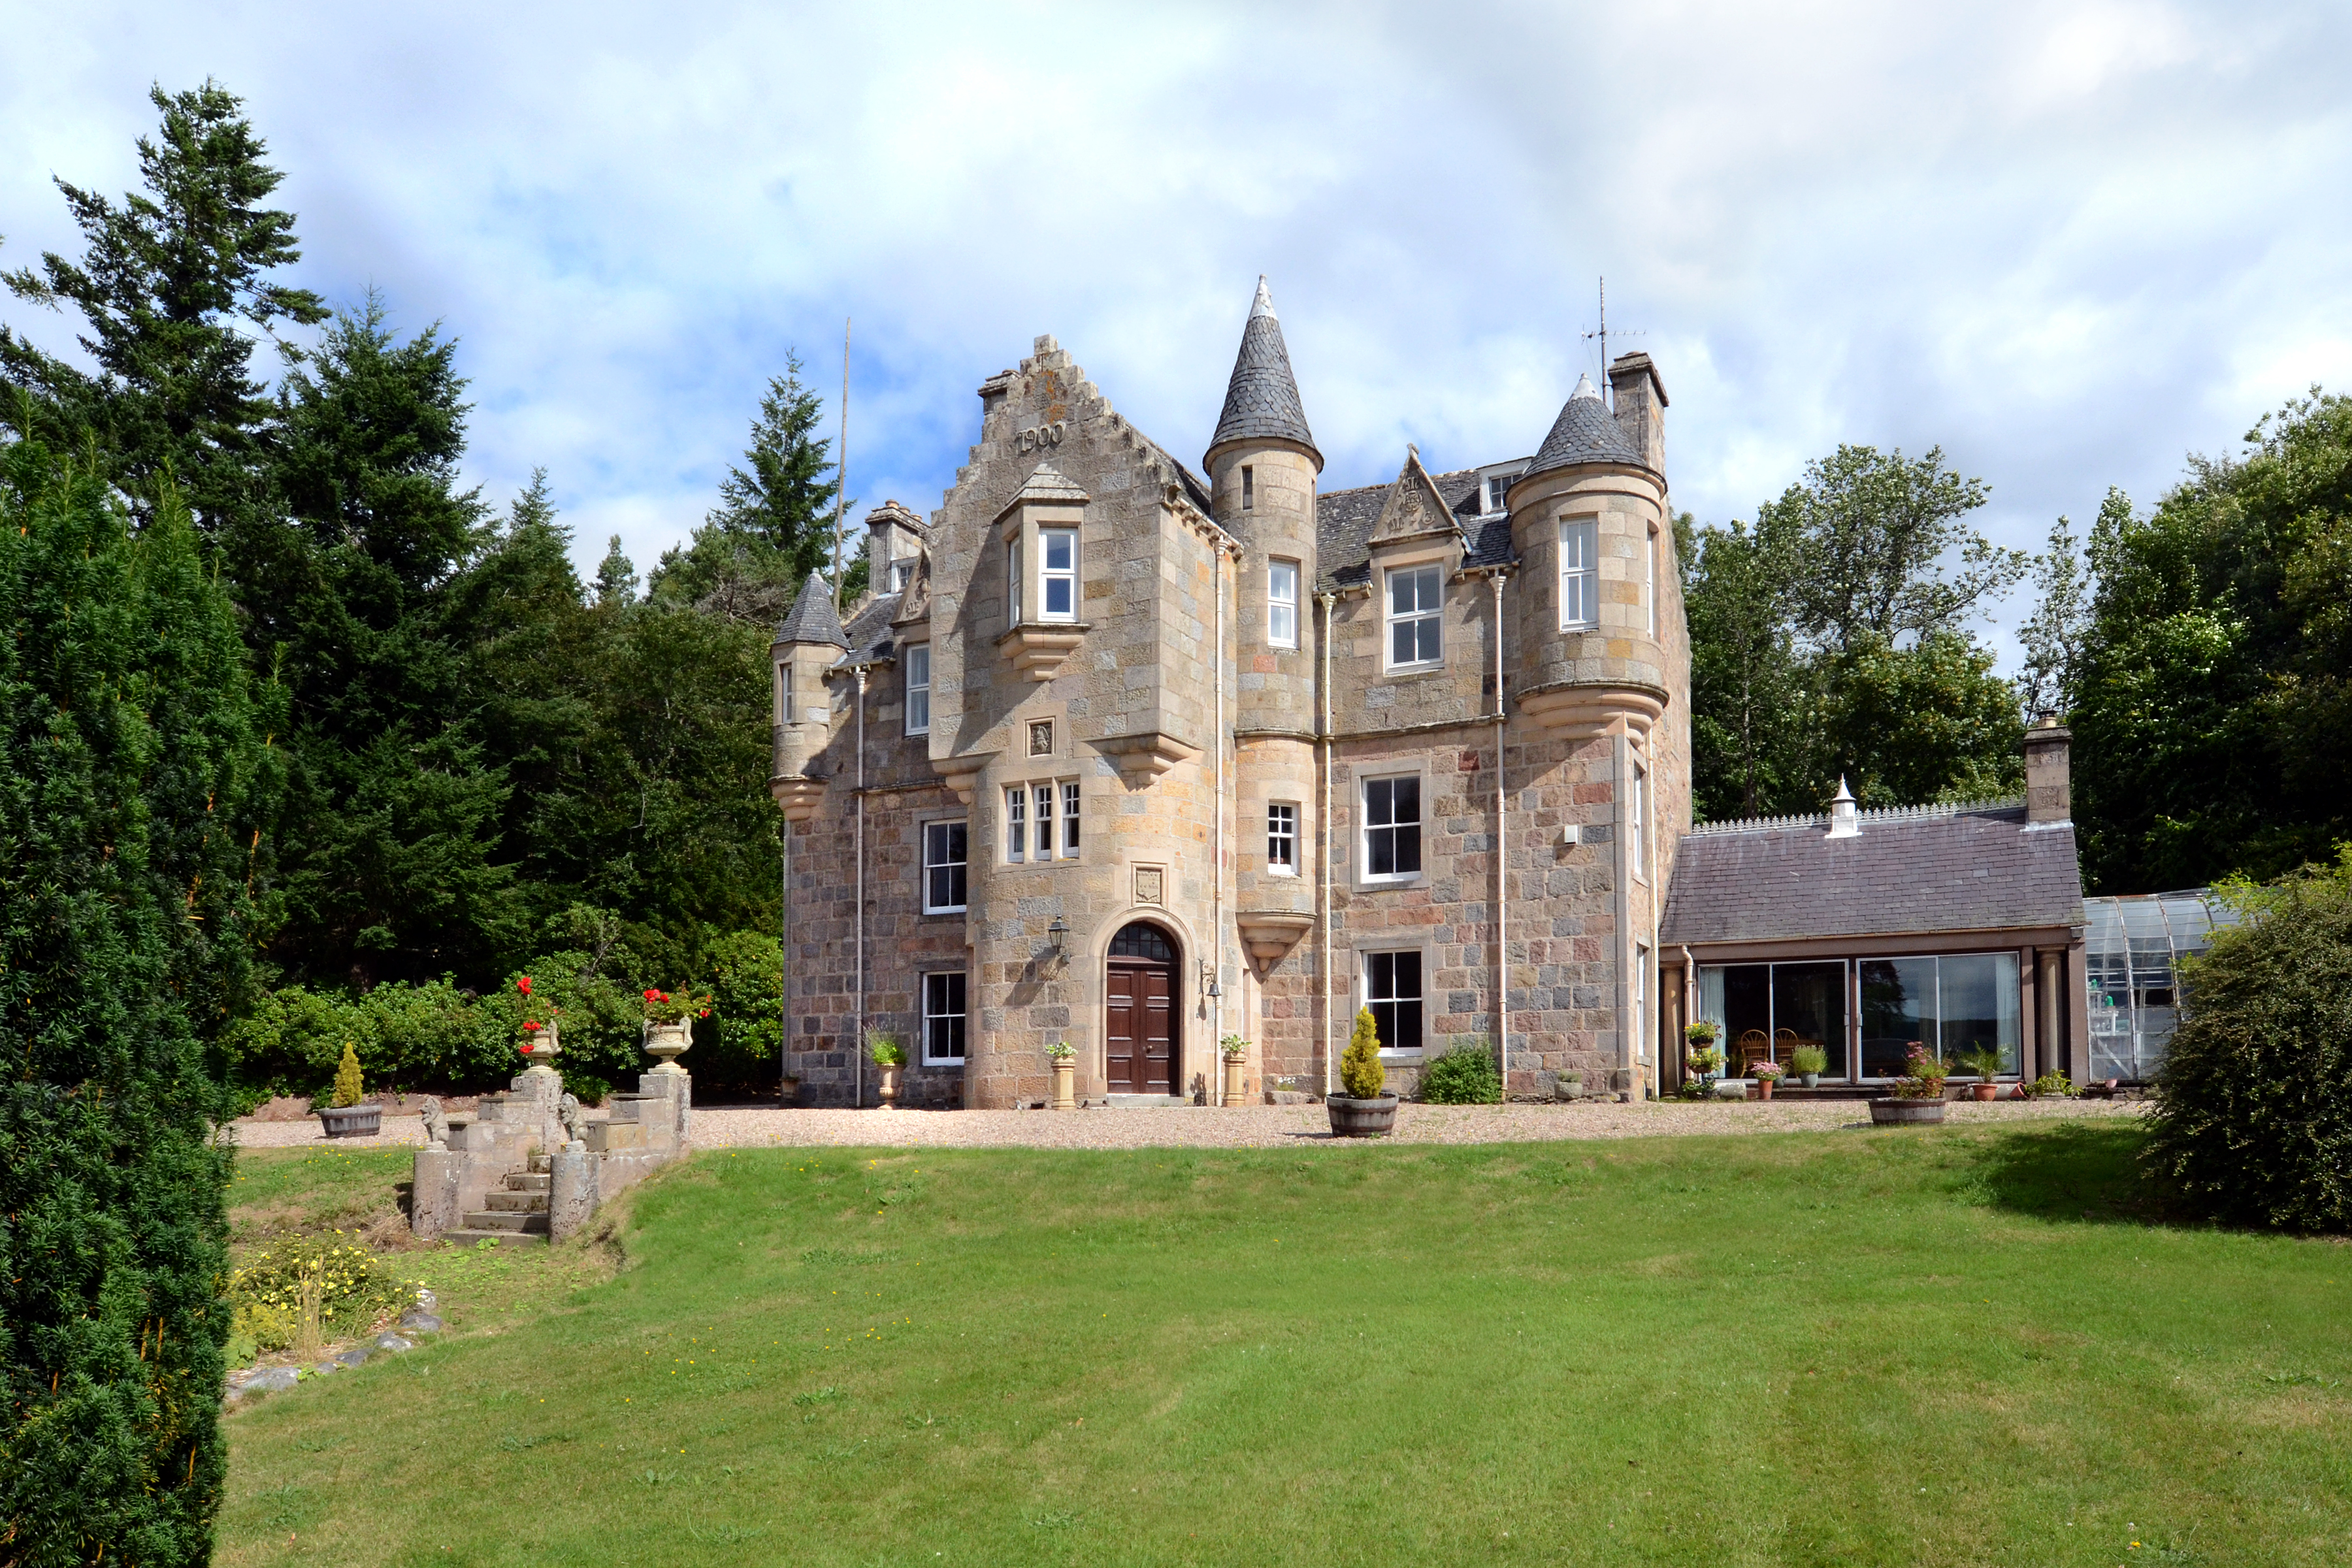 £1m Scots mansion boasts a “love room” for romantics